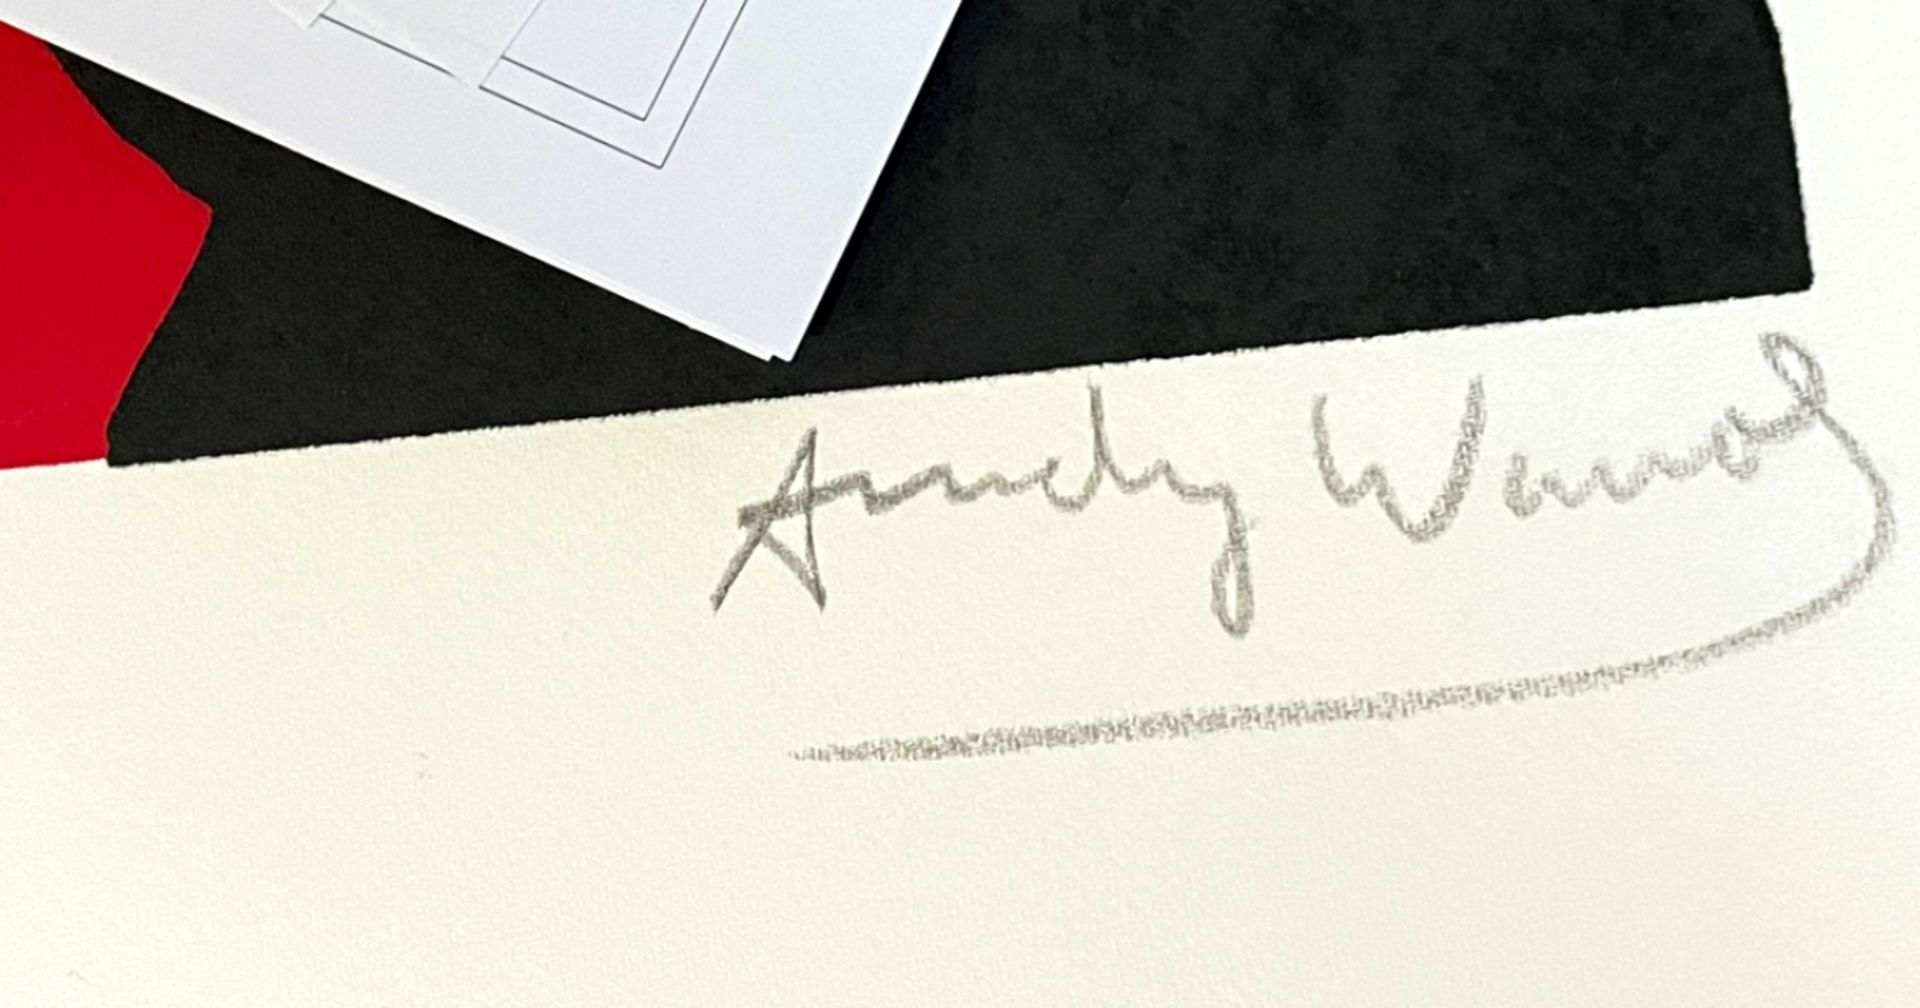 Andy Warhol (1928-1987), Silkscreen Print - Image 2 of 3